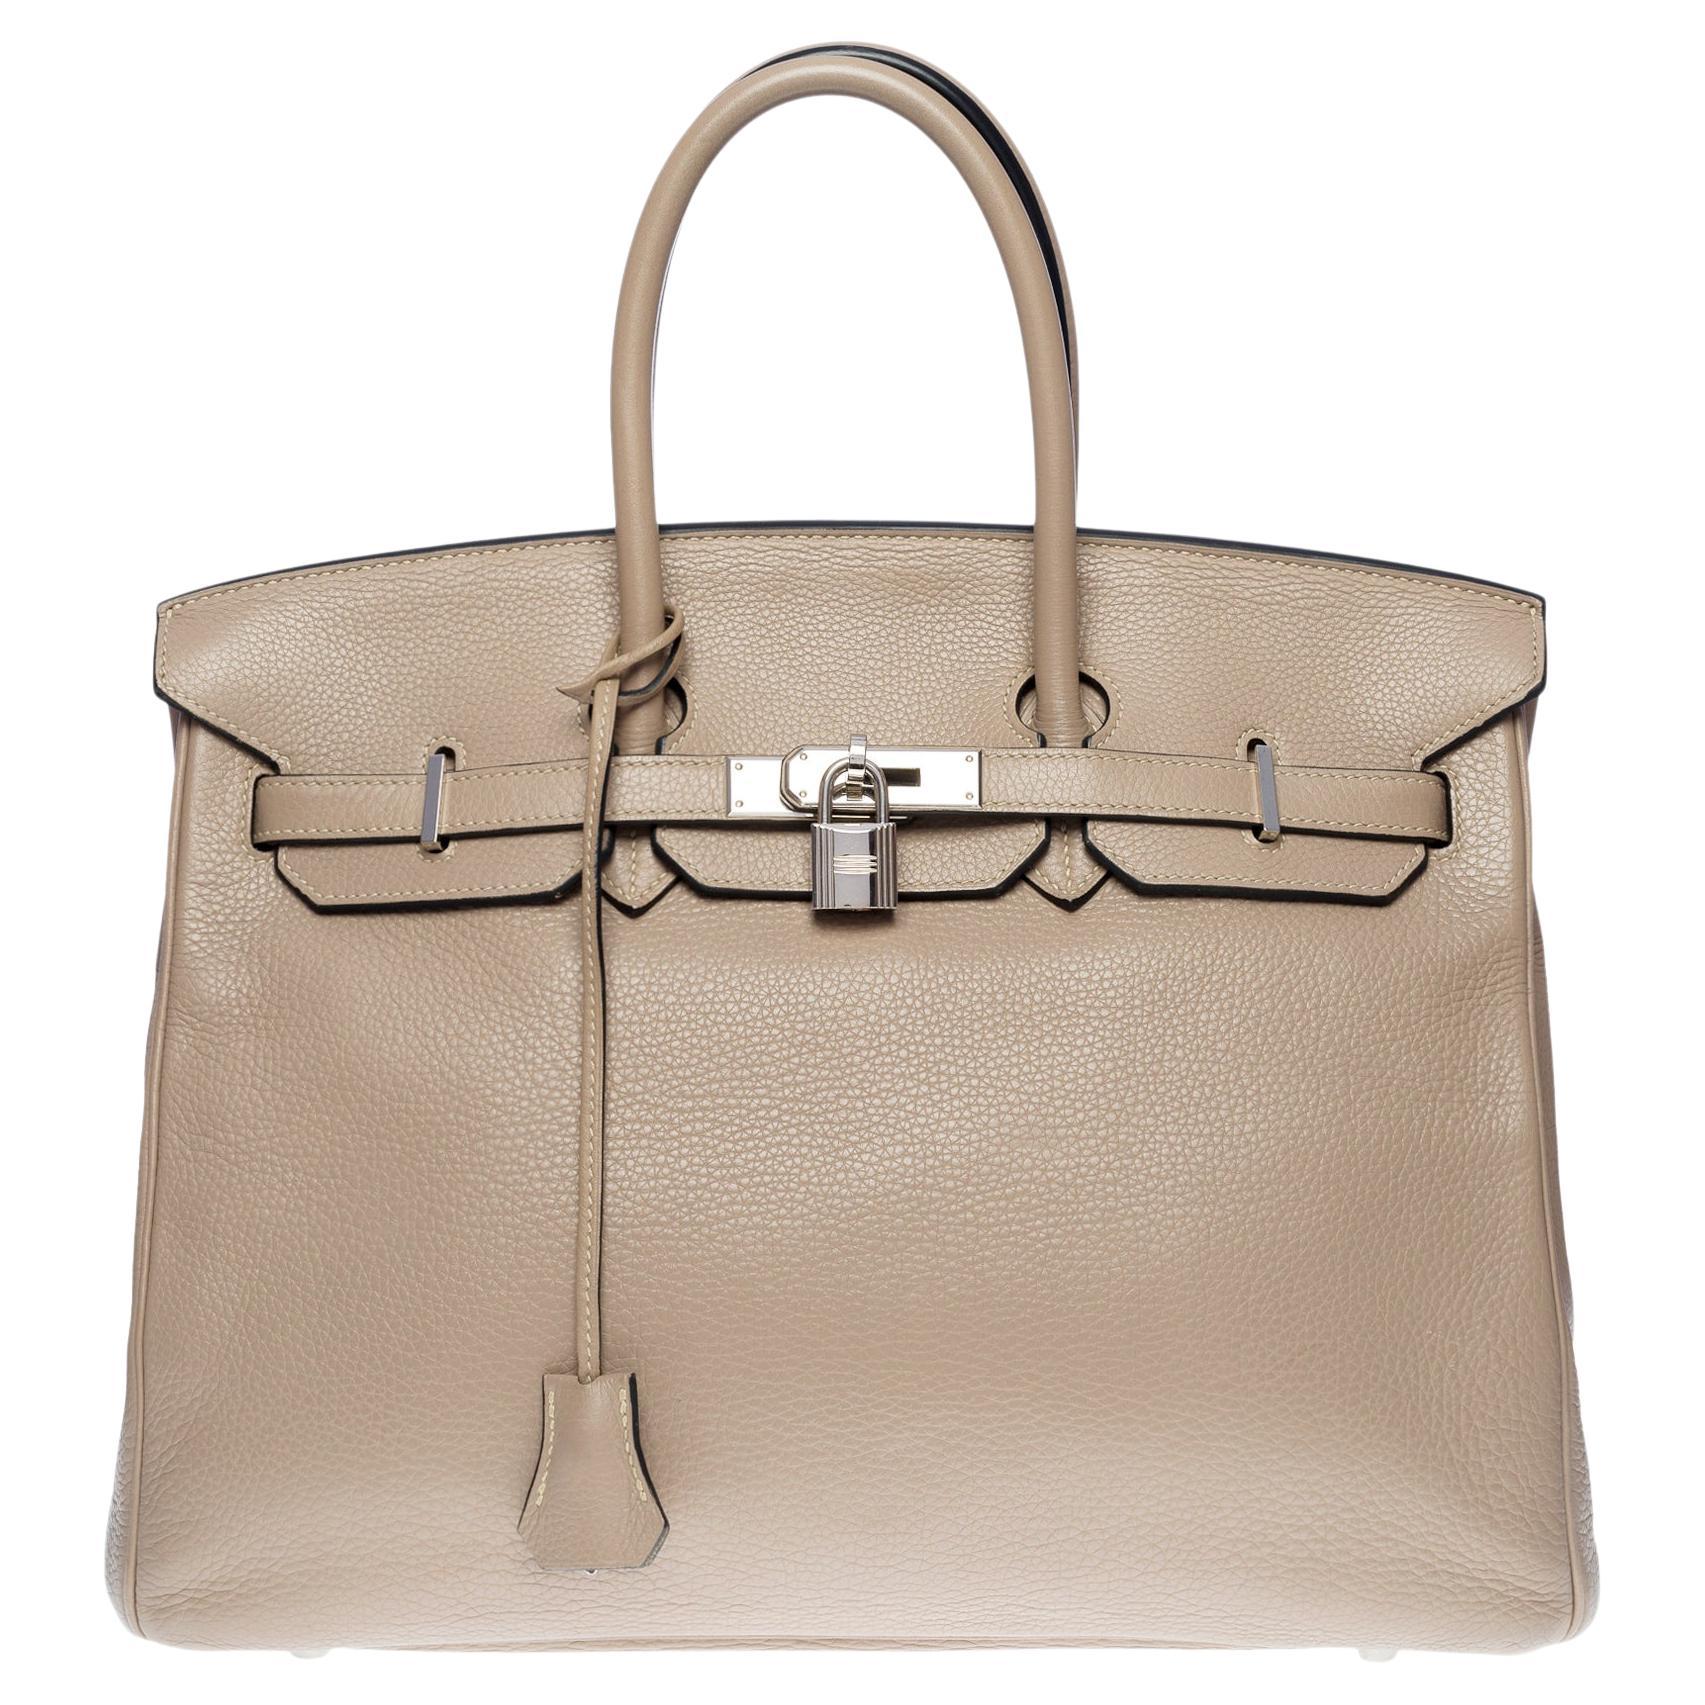 Sold at Auction: Hermes 35cm Cream Leather Kelly Retourne Bag